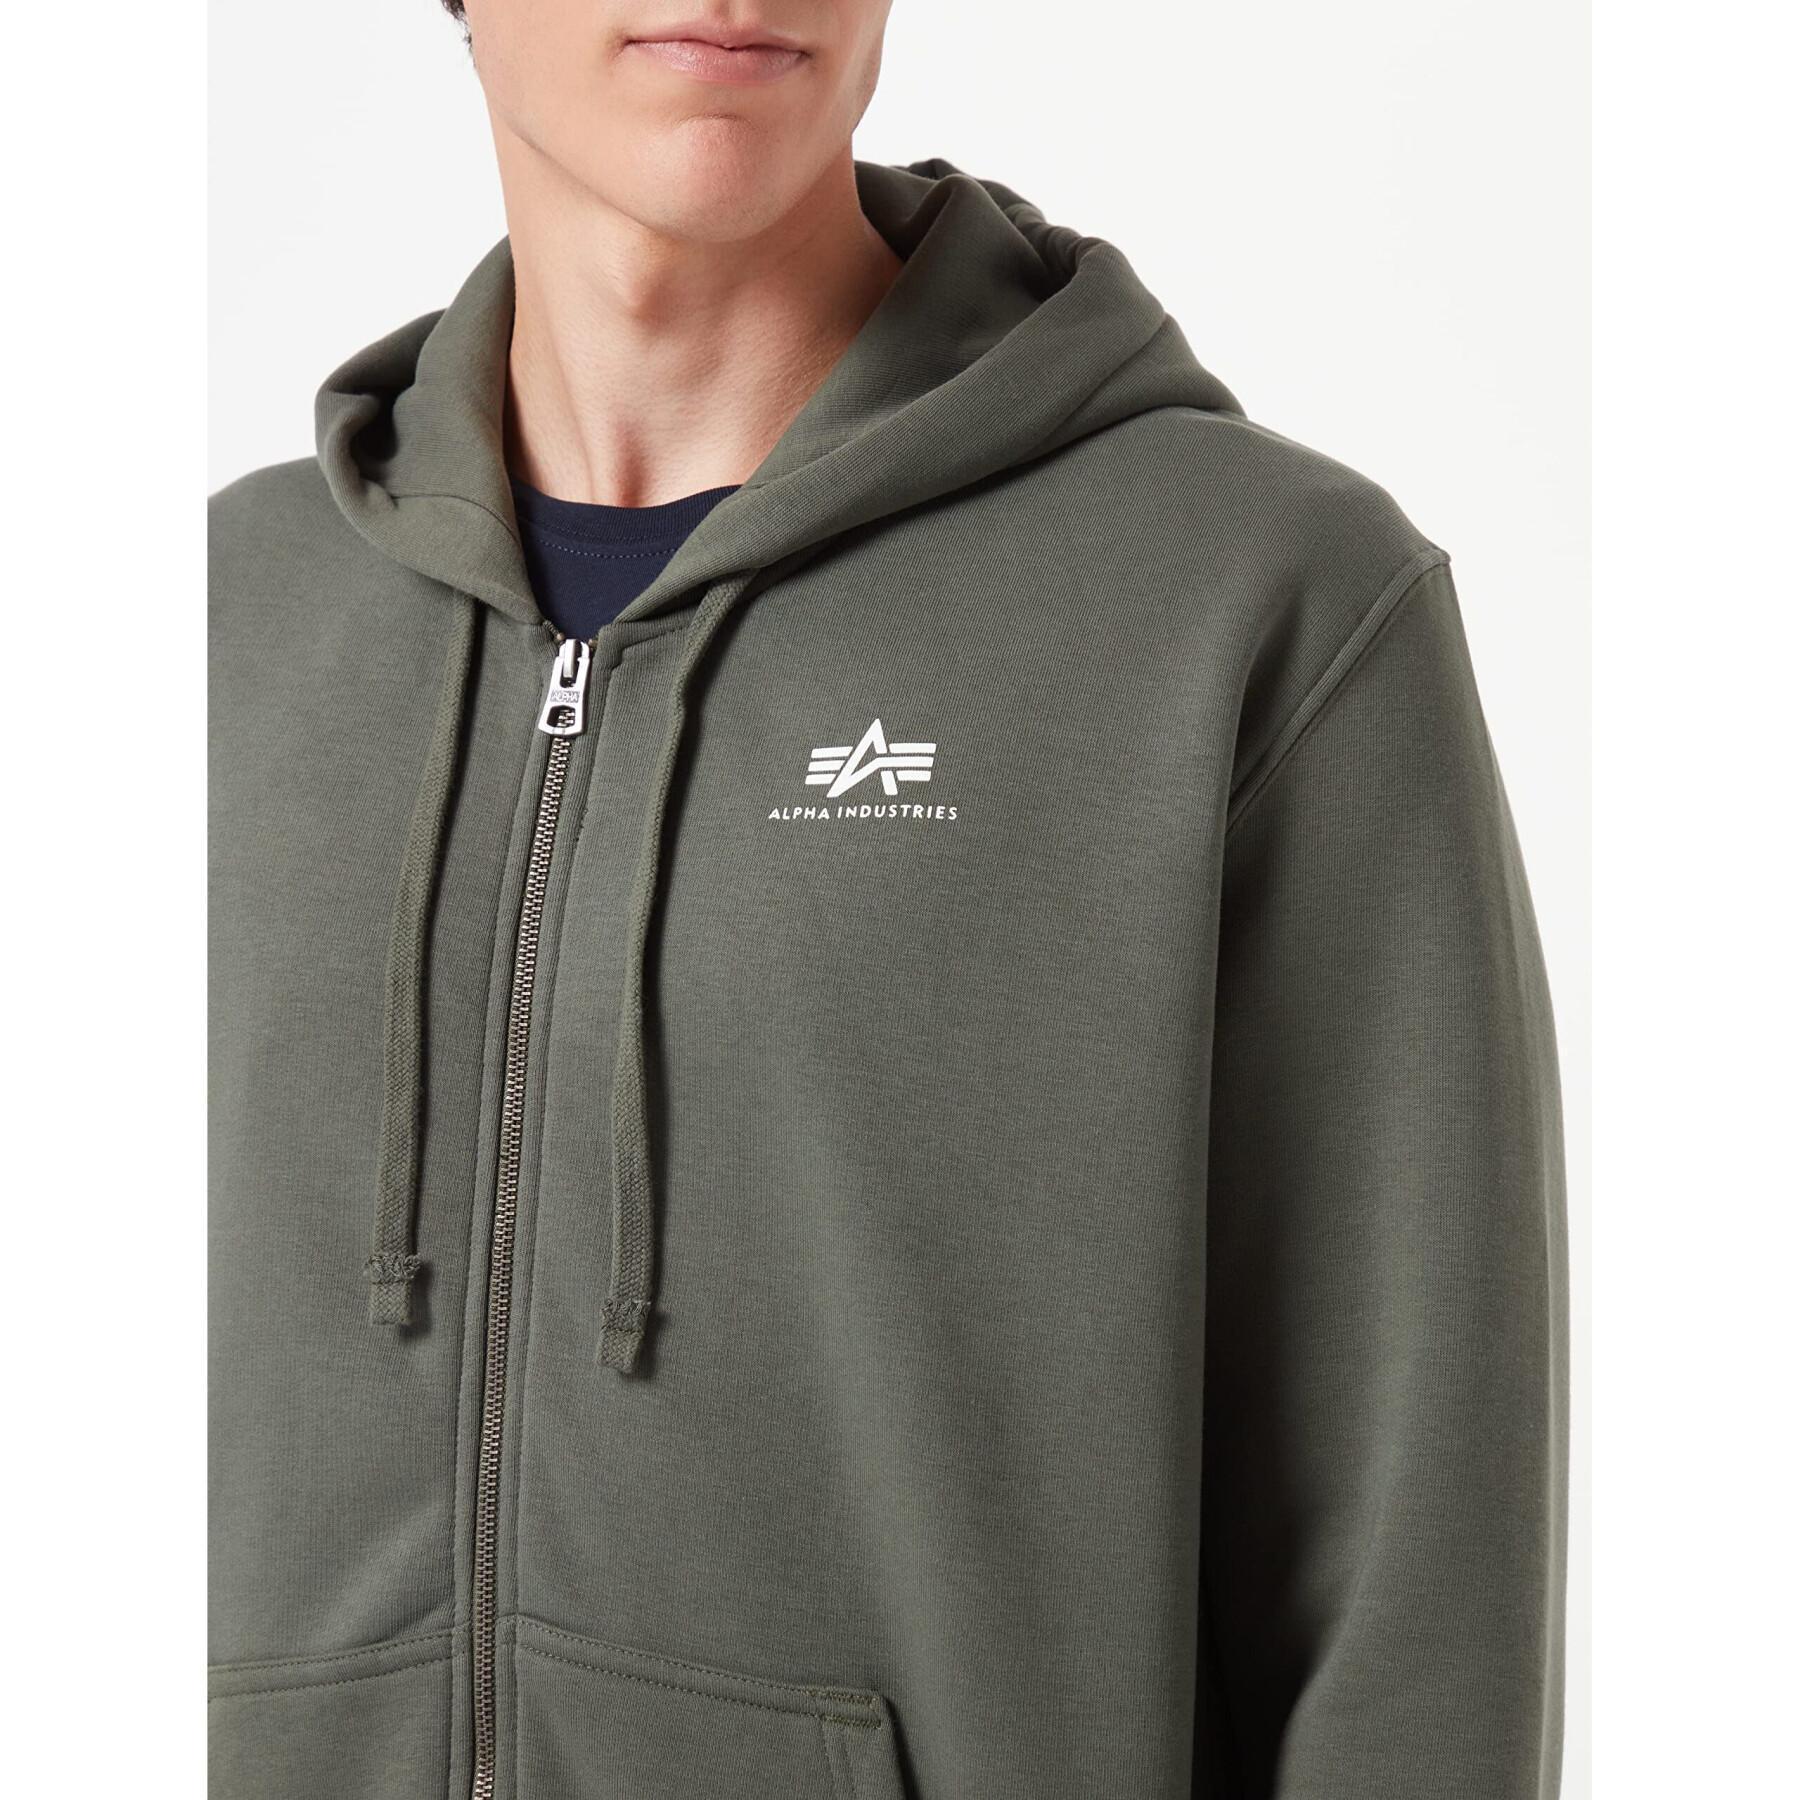 Hooded sweatshirt Alpha Industries Basic Zip